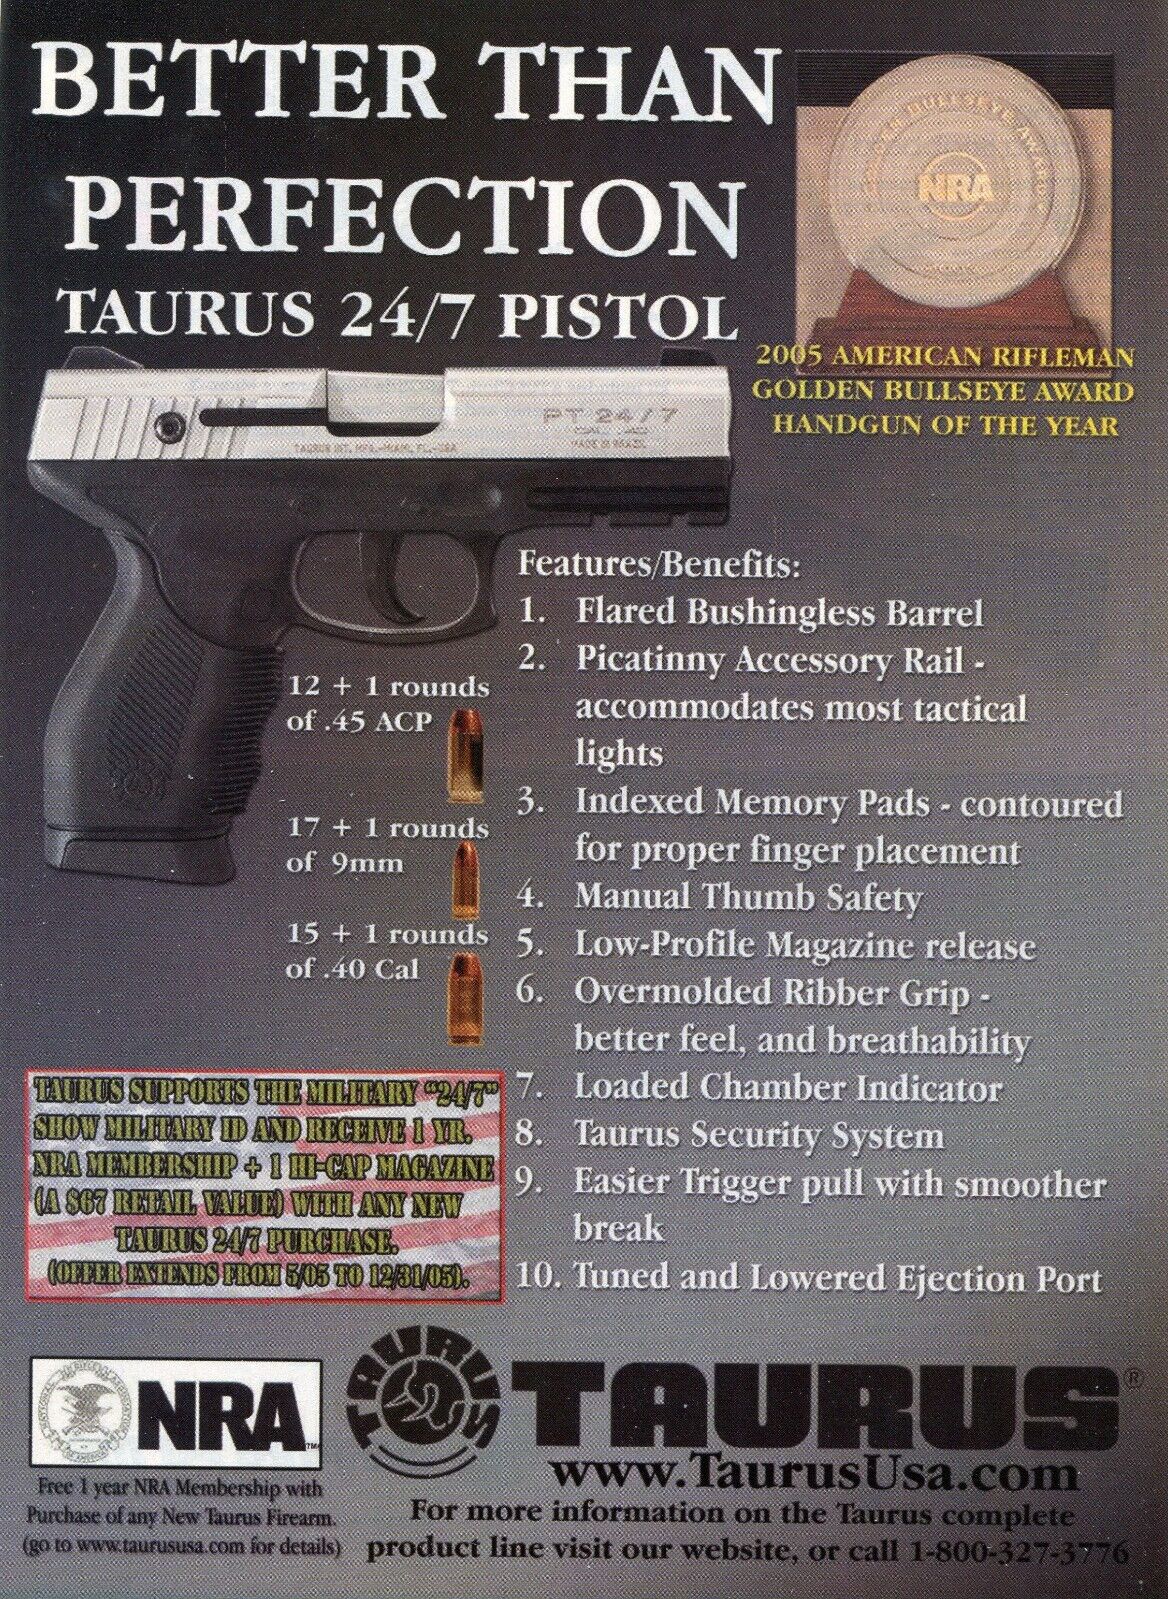 2005 Print Ad of Taurus PT 24/7 Pistol